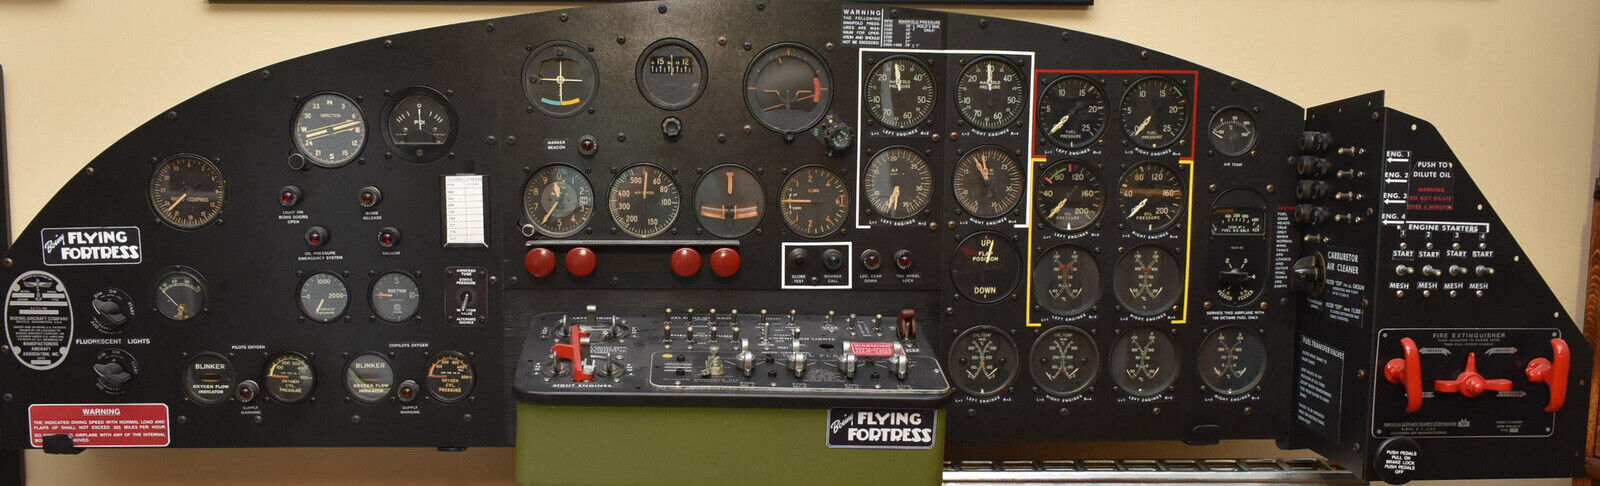 Boeing B17 Flying Fortress WWII Main Instrument Panel Original Gauges